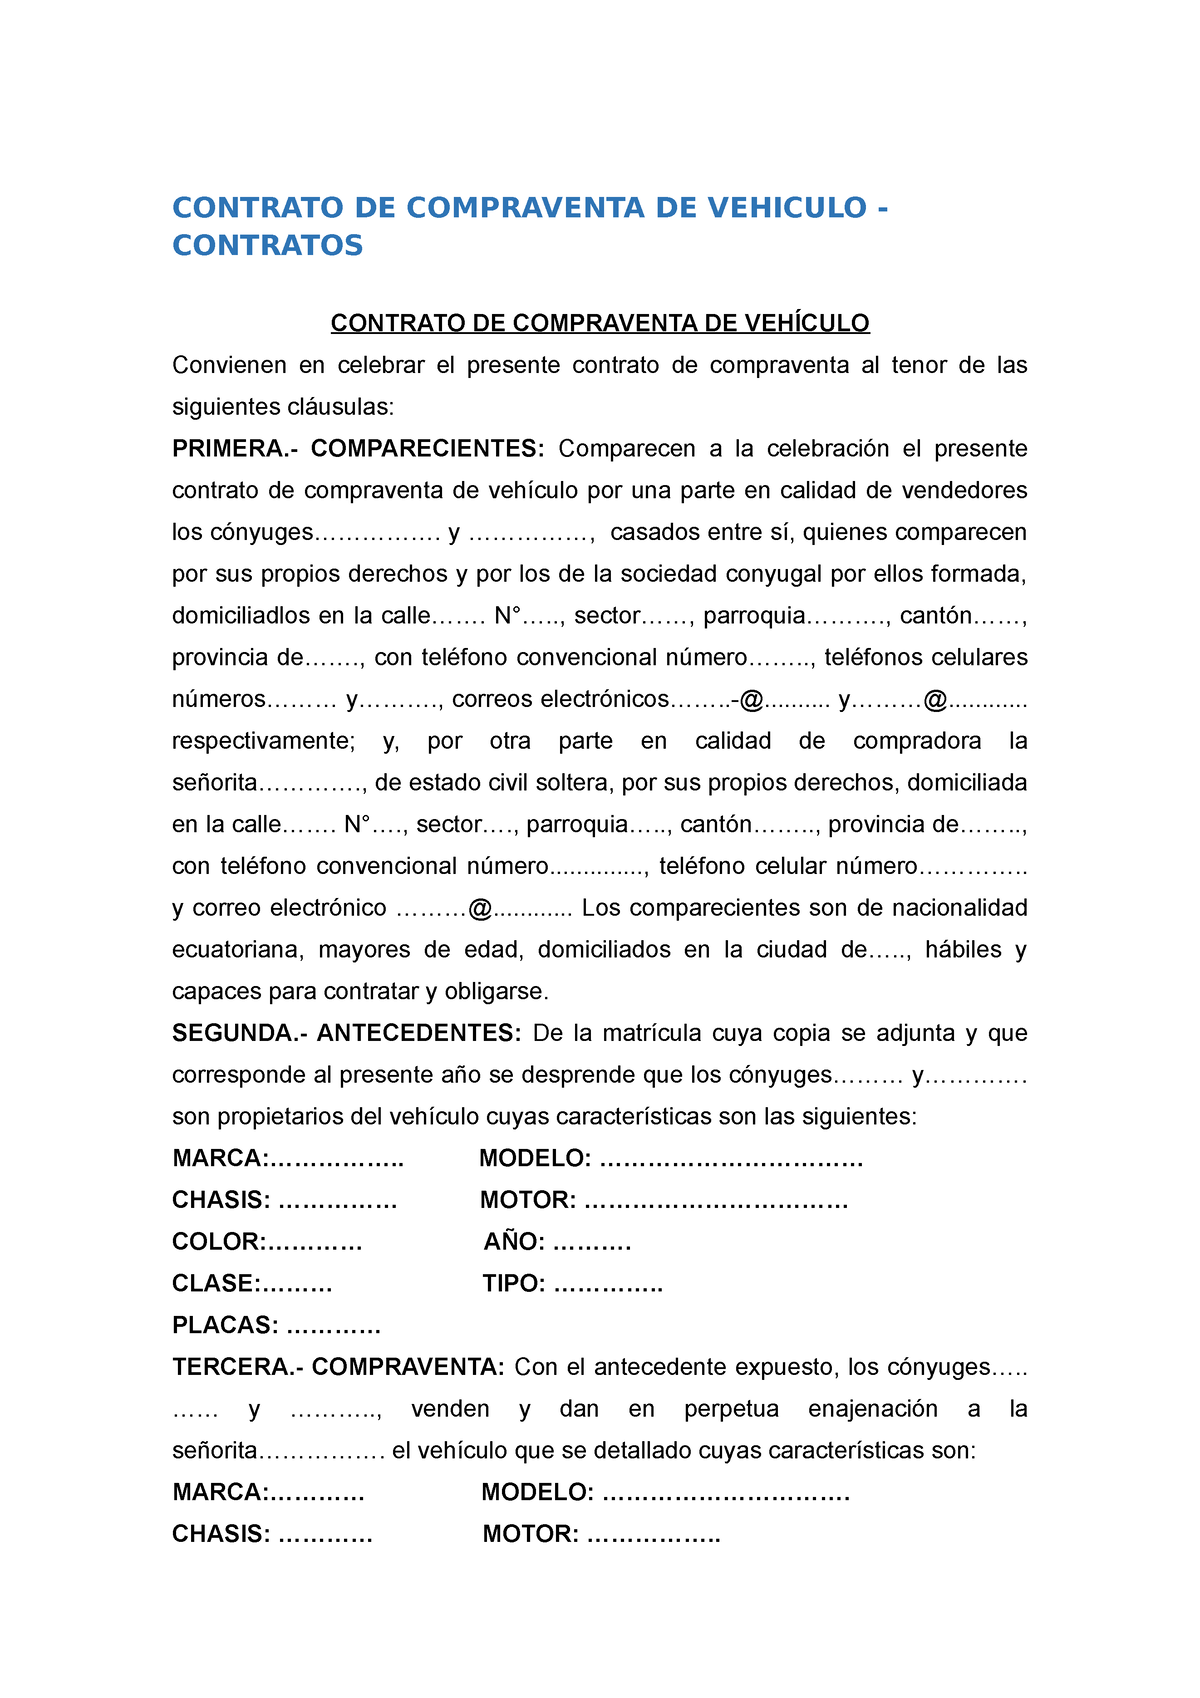 Contratode Compraventade Vehiculo Contrato De Compraventa De Vehiculo Contratos Contrato 9877